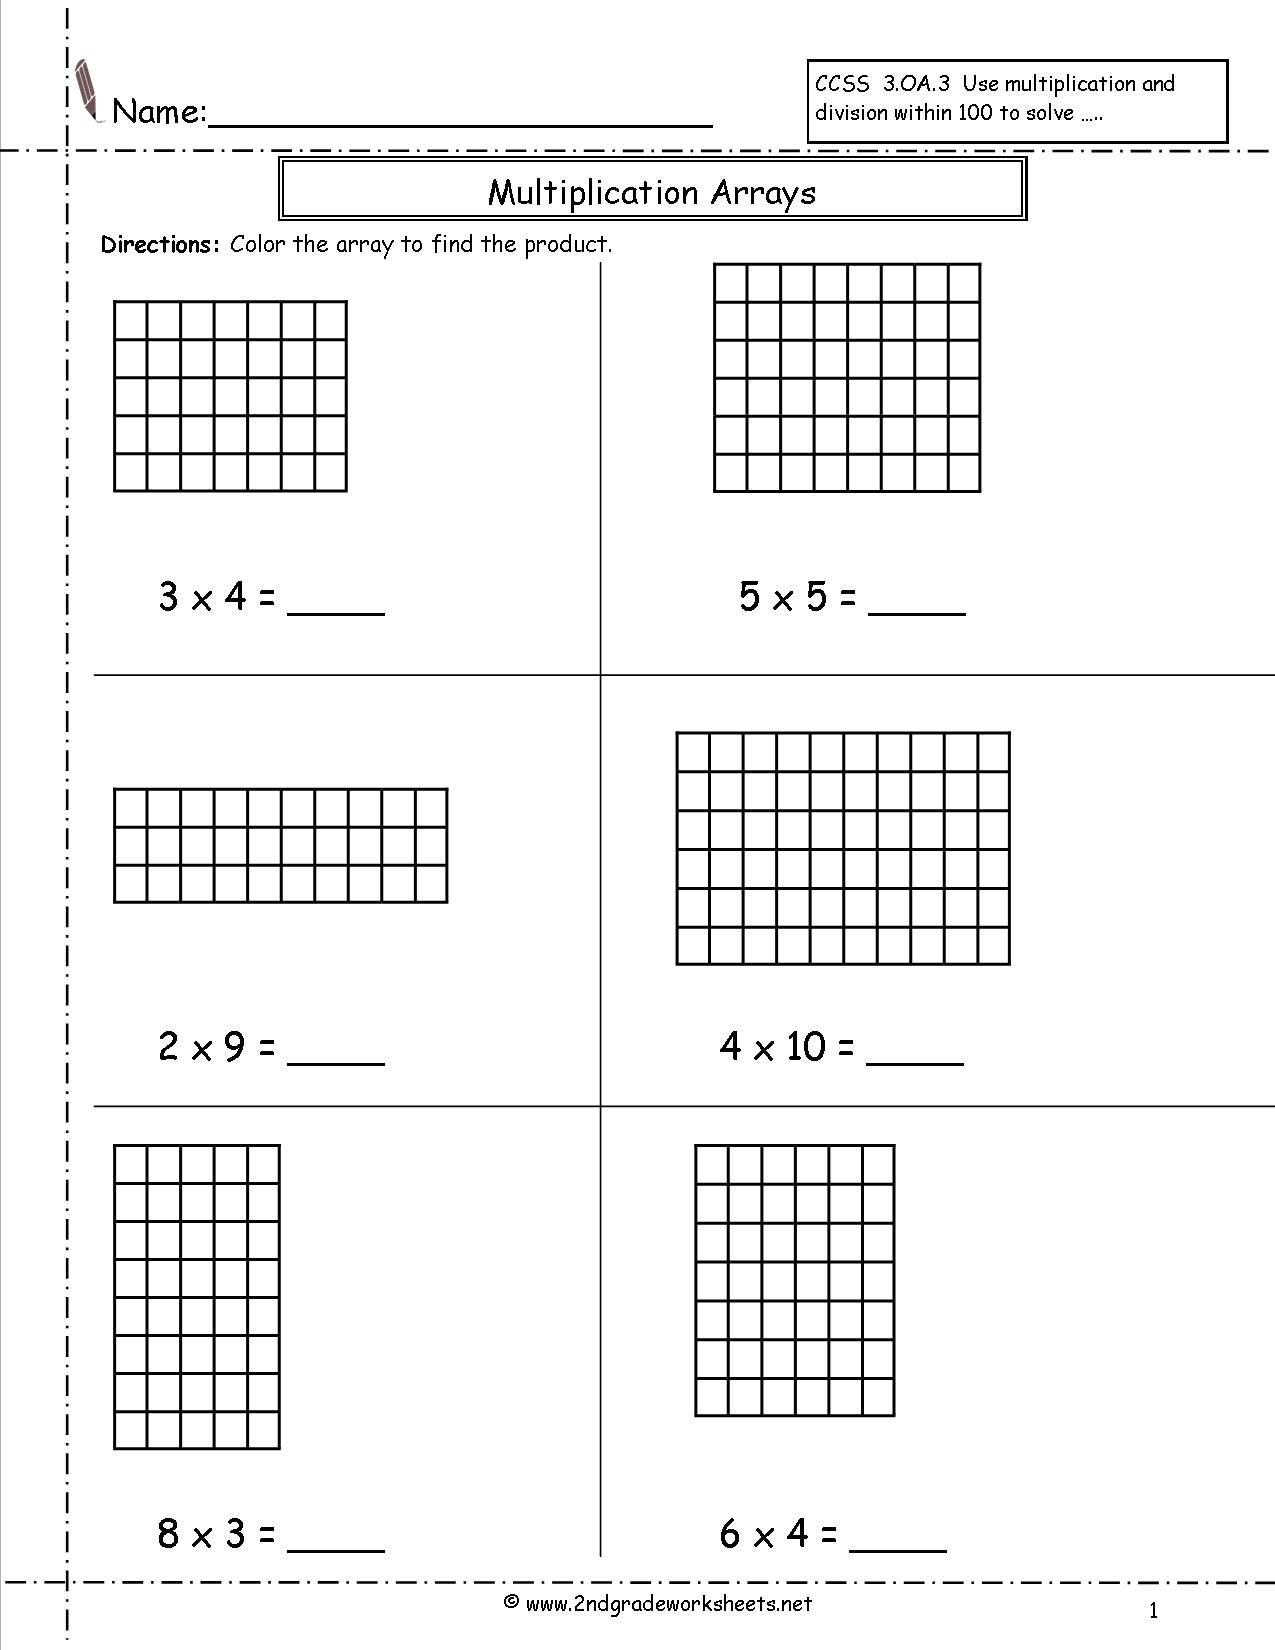  Multiplication Worksheets Area Model PrintableMultiplication